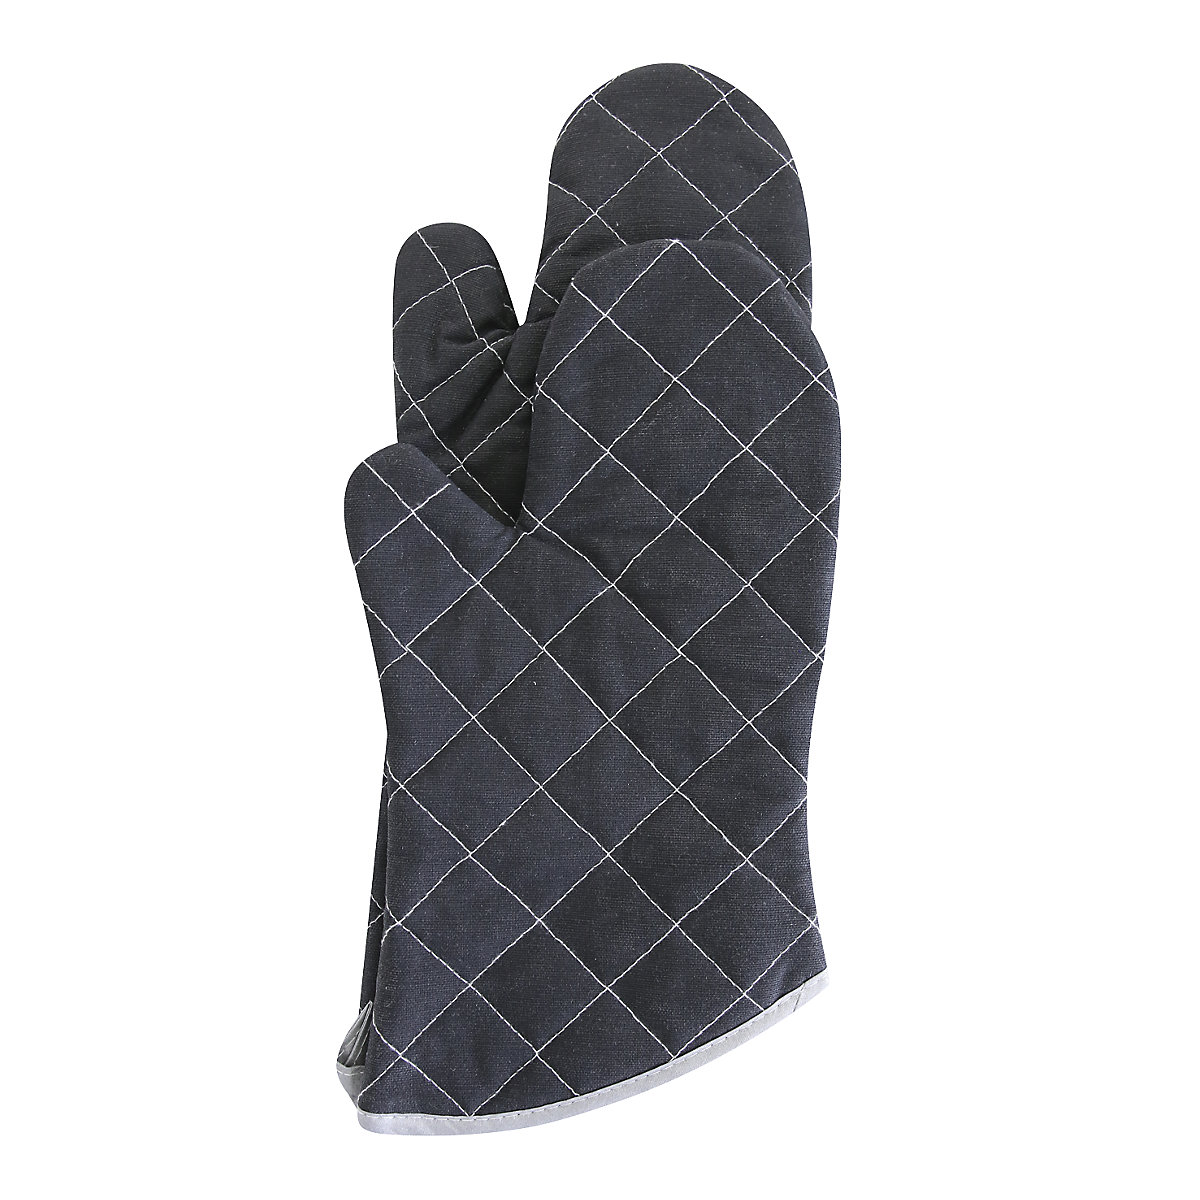 FLAMESTAR heat resistant gloves